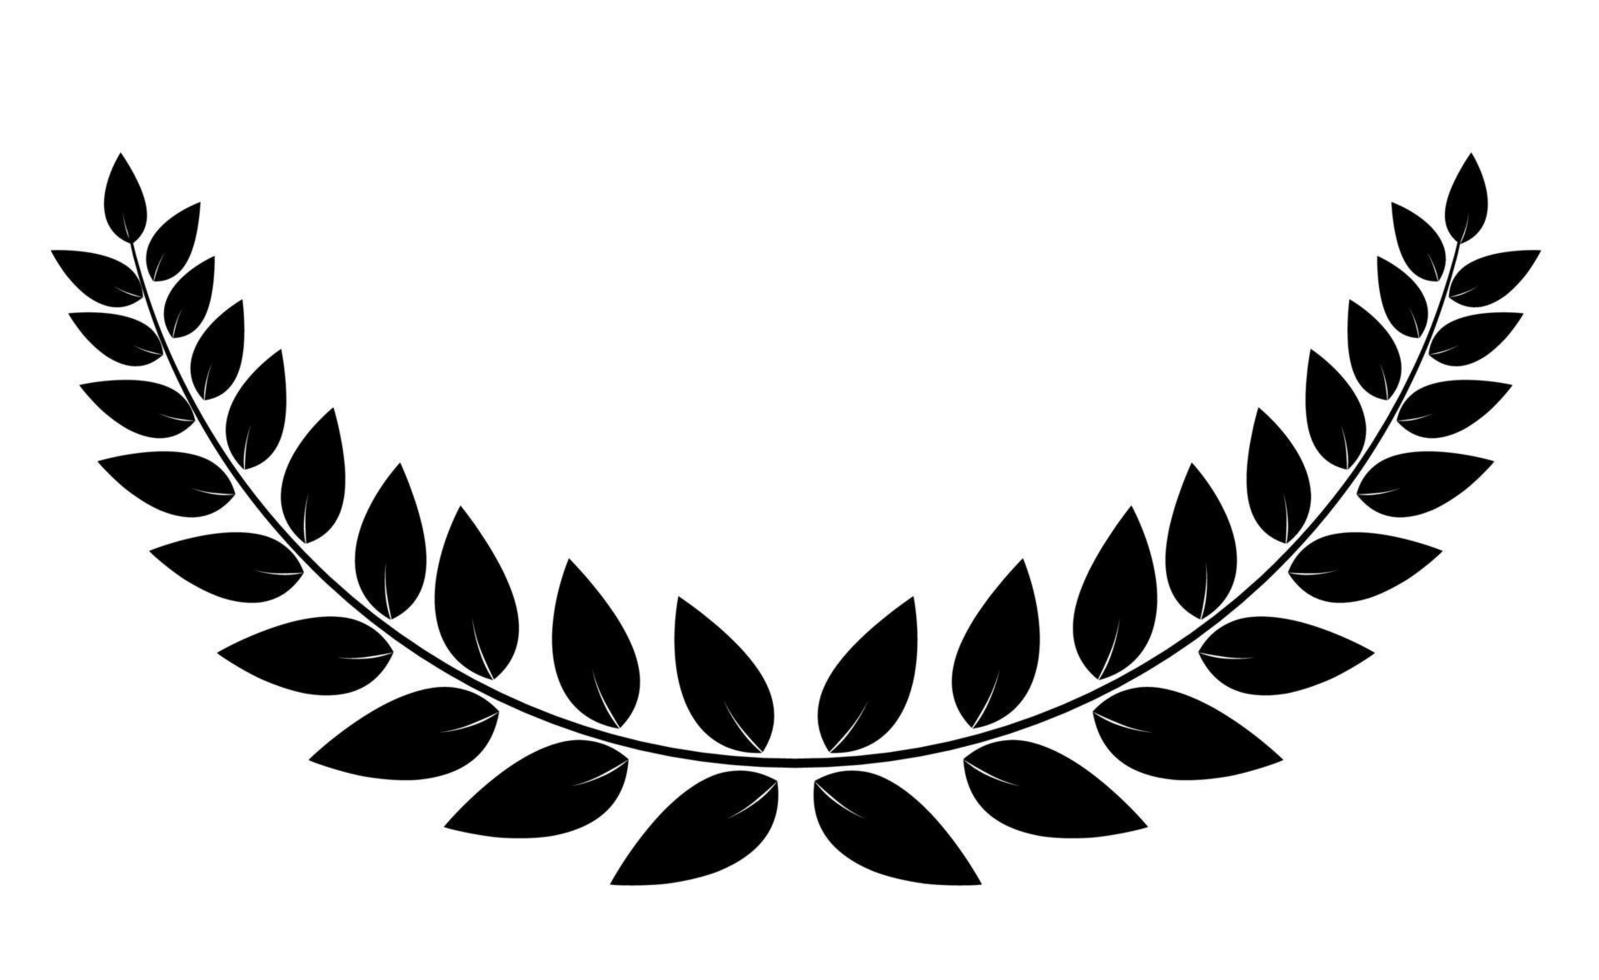 Laurel wreath isolated on white background. Vector Illustration EPS10